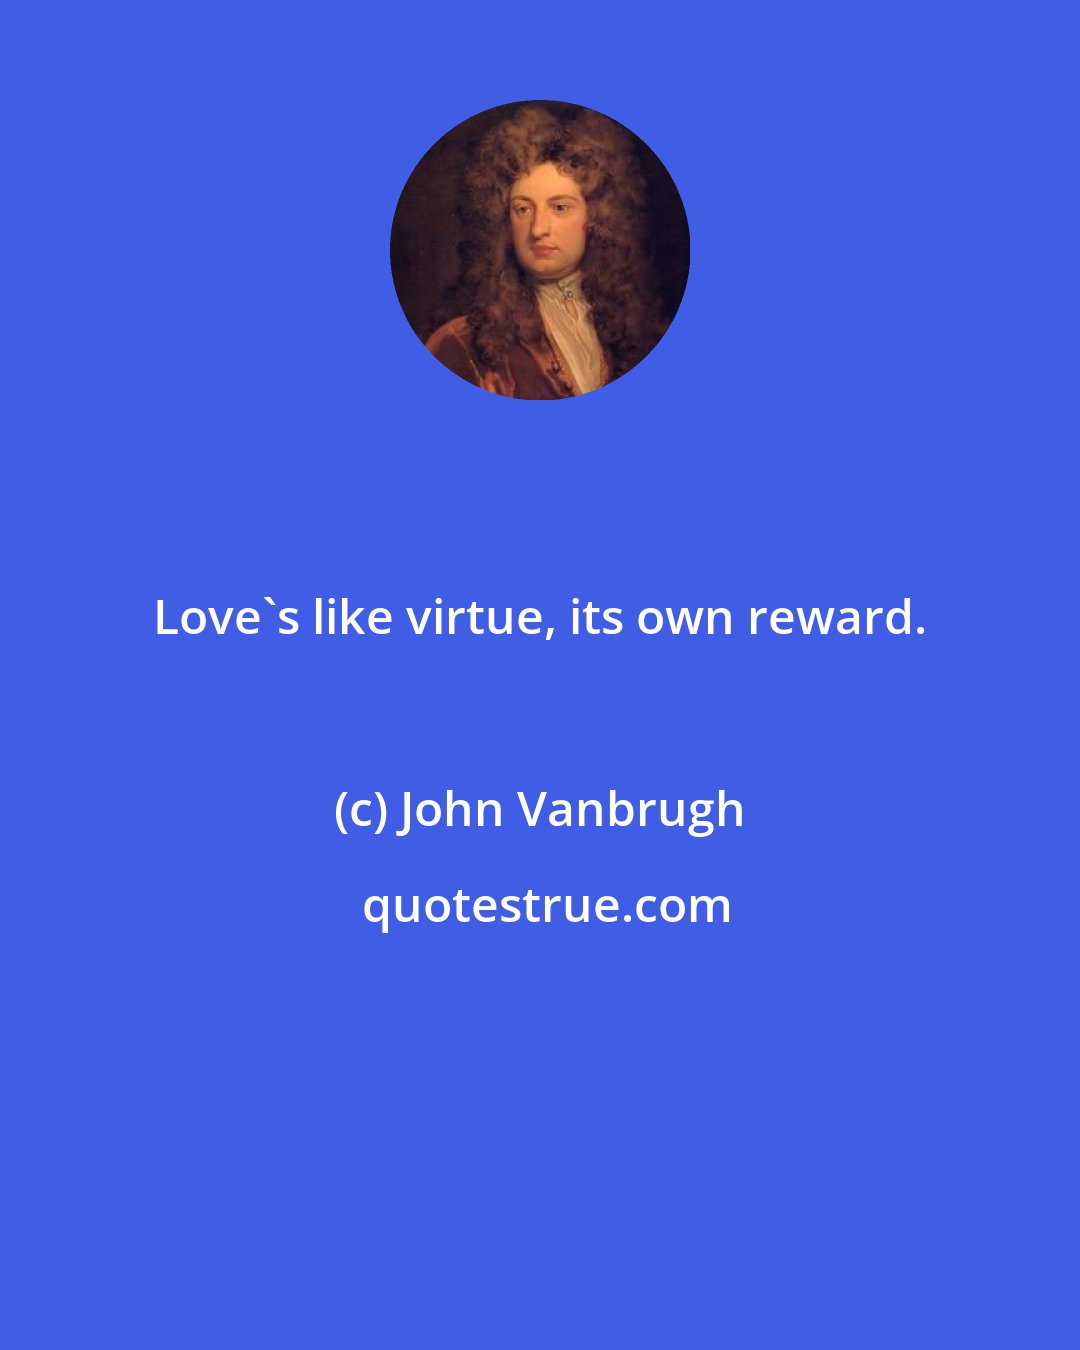 John Vanbrugh: Love's like virtue, its own reward.